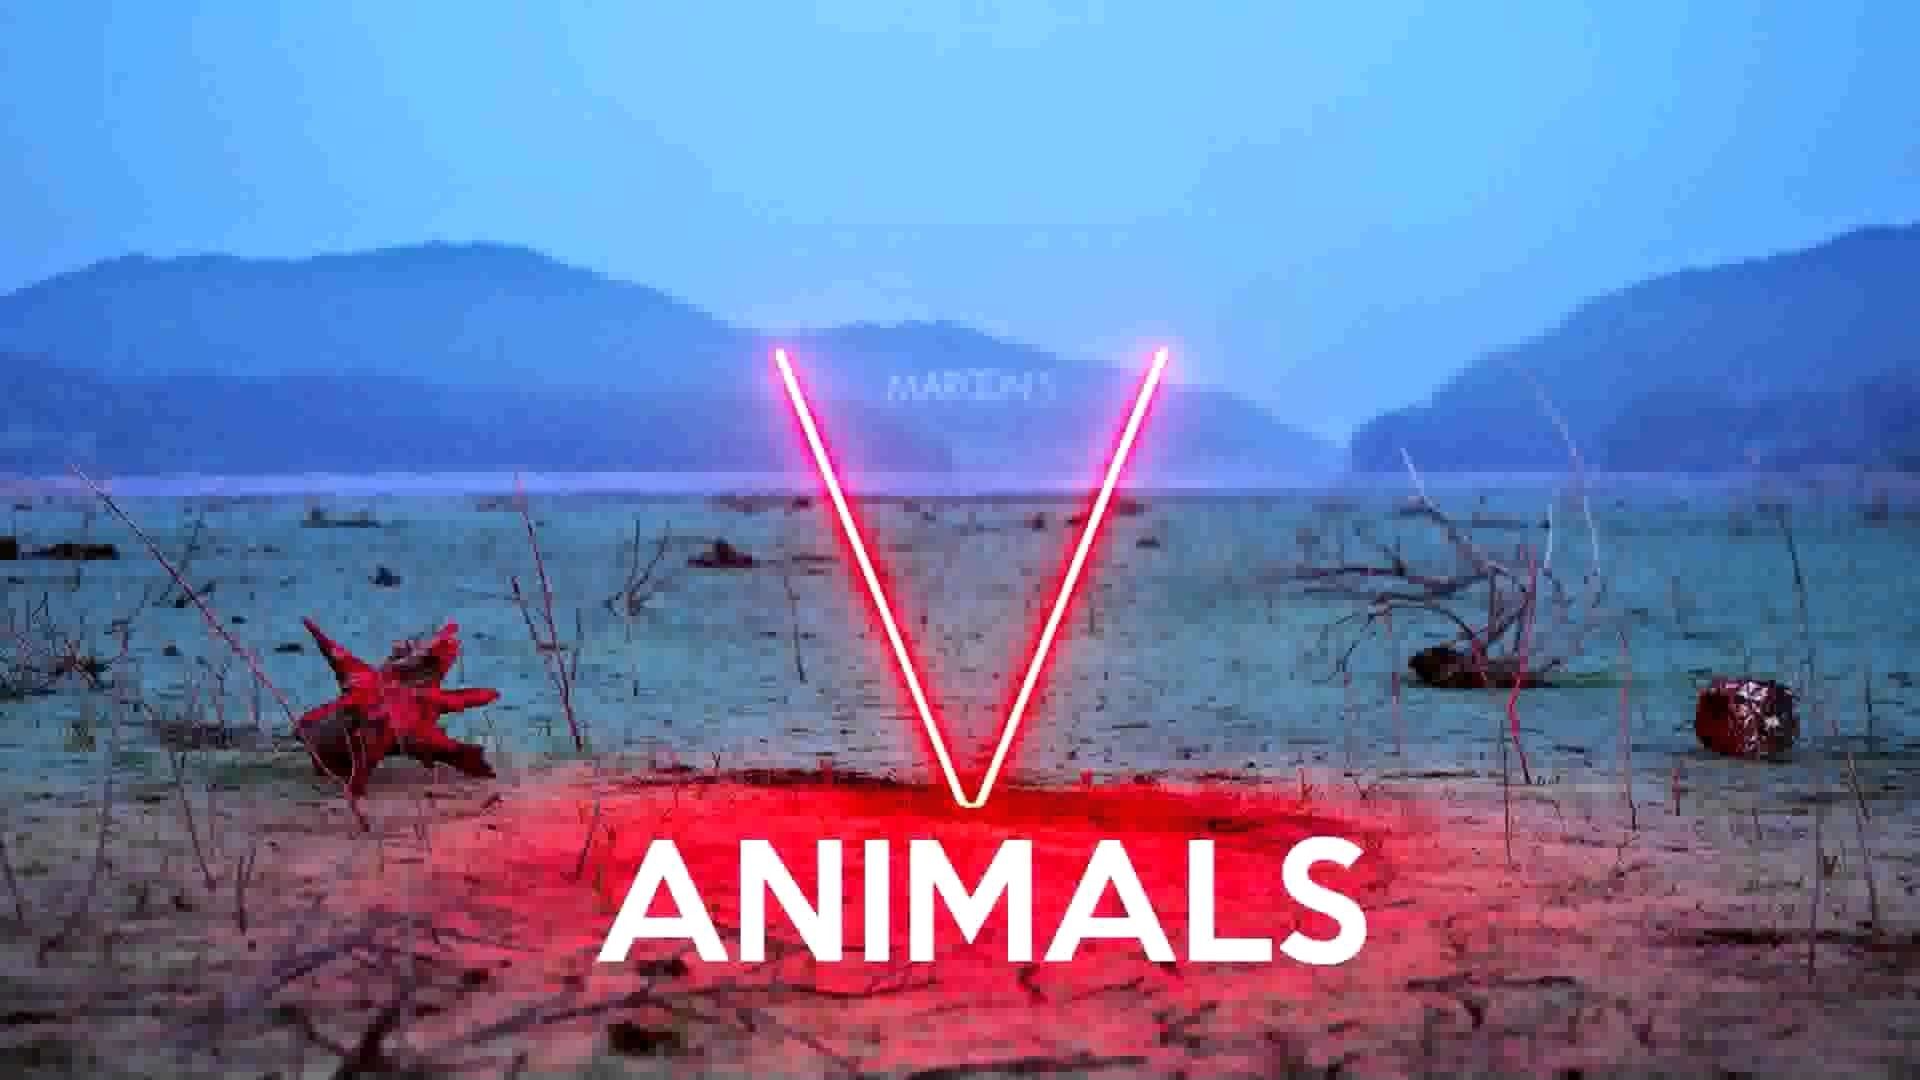 Maroon 5 Animals Wallpapers - Wallpaper Cave